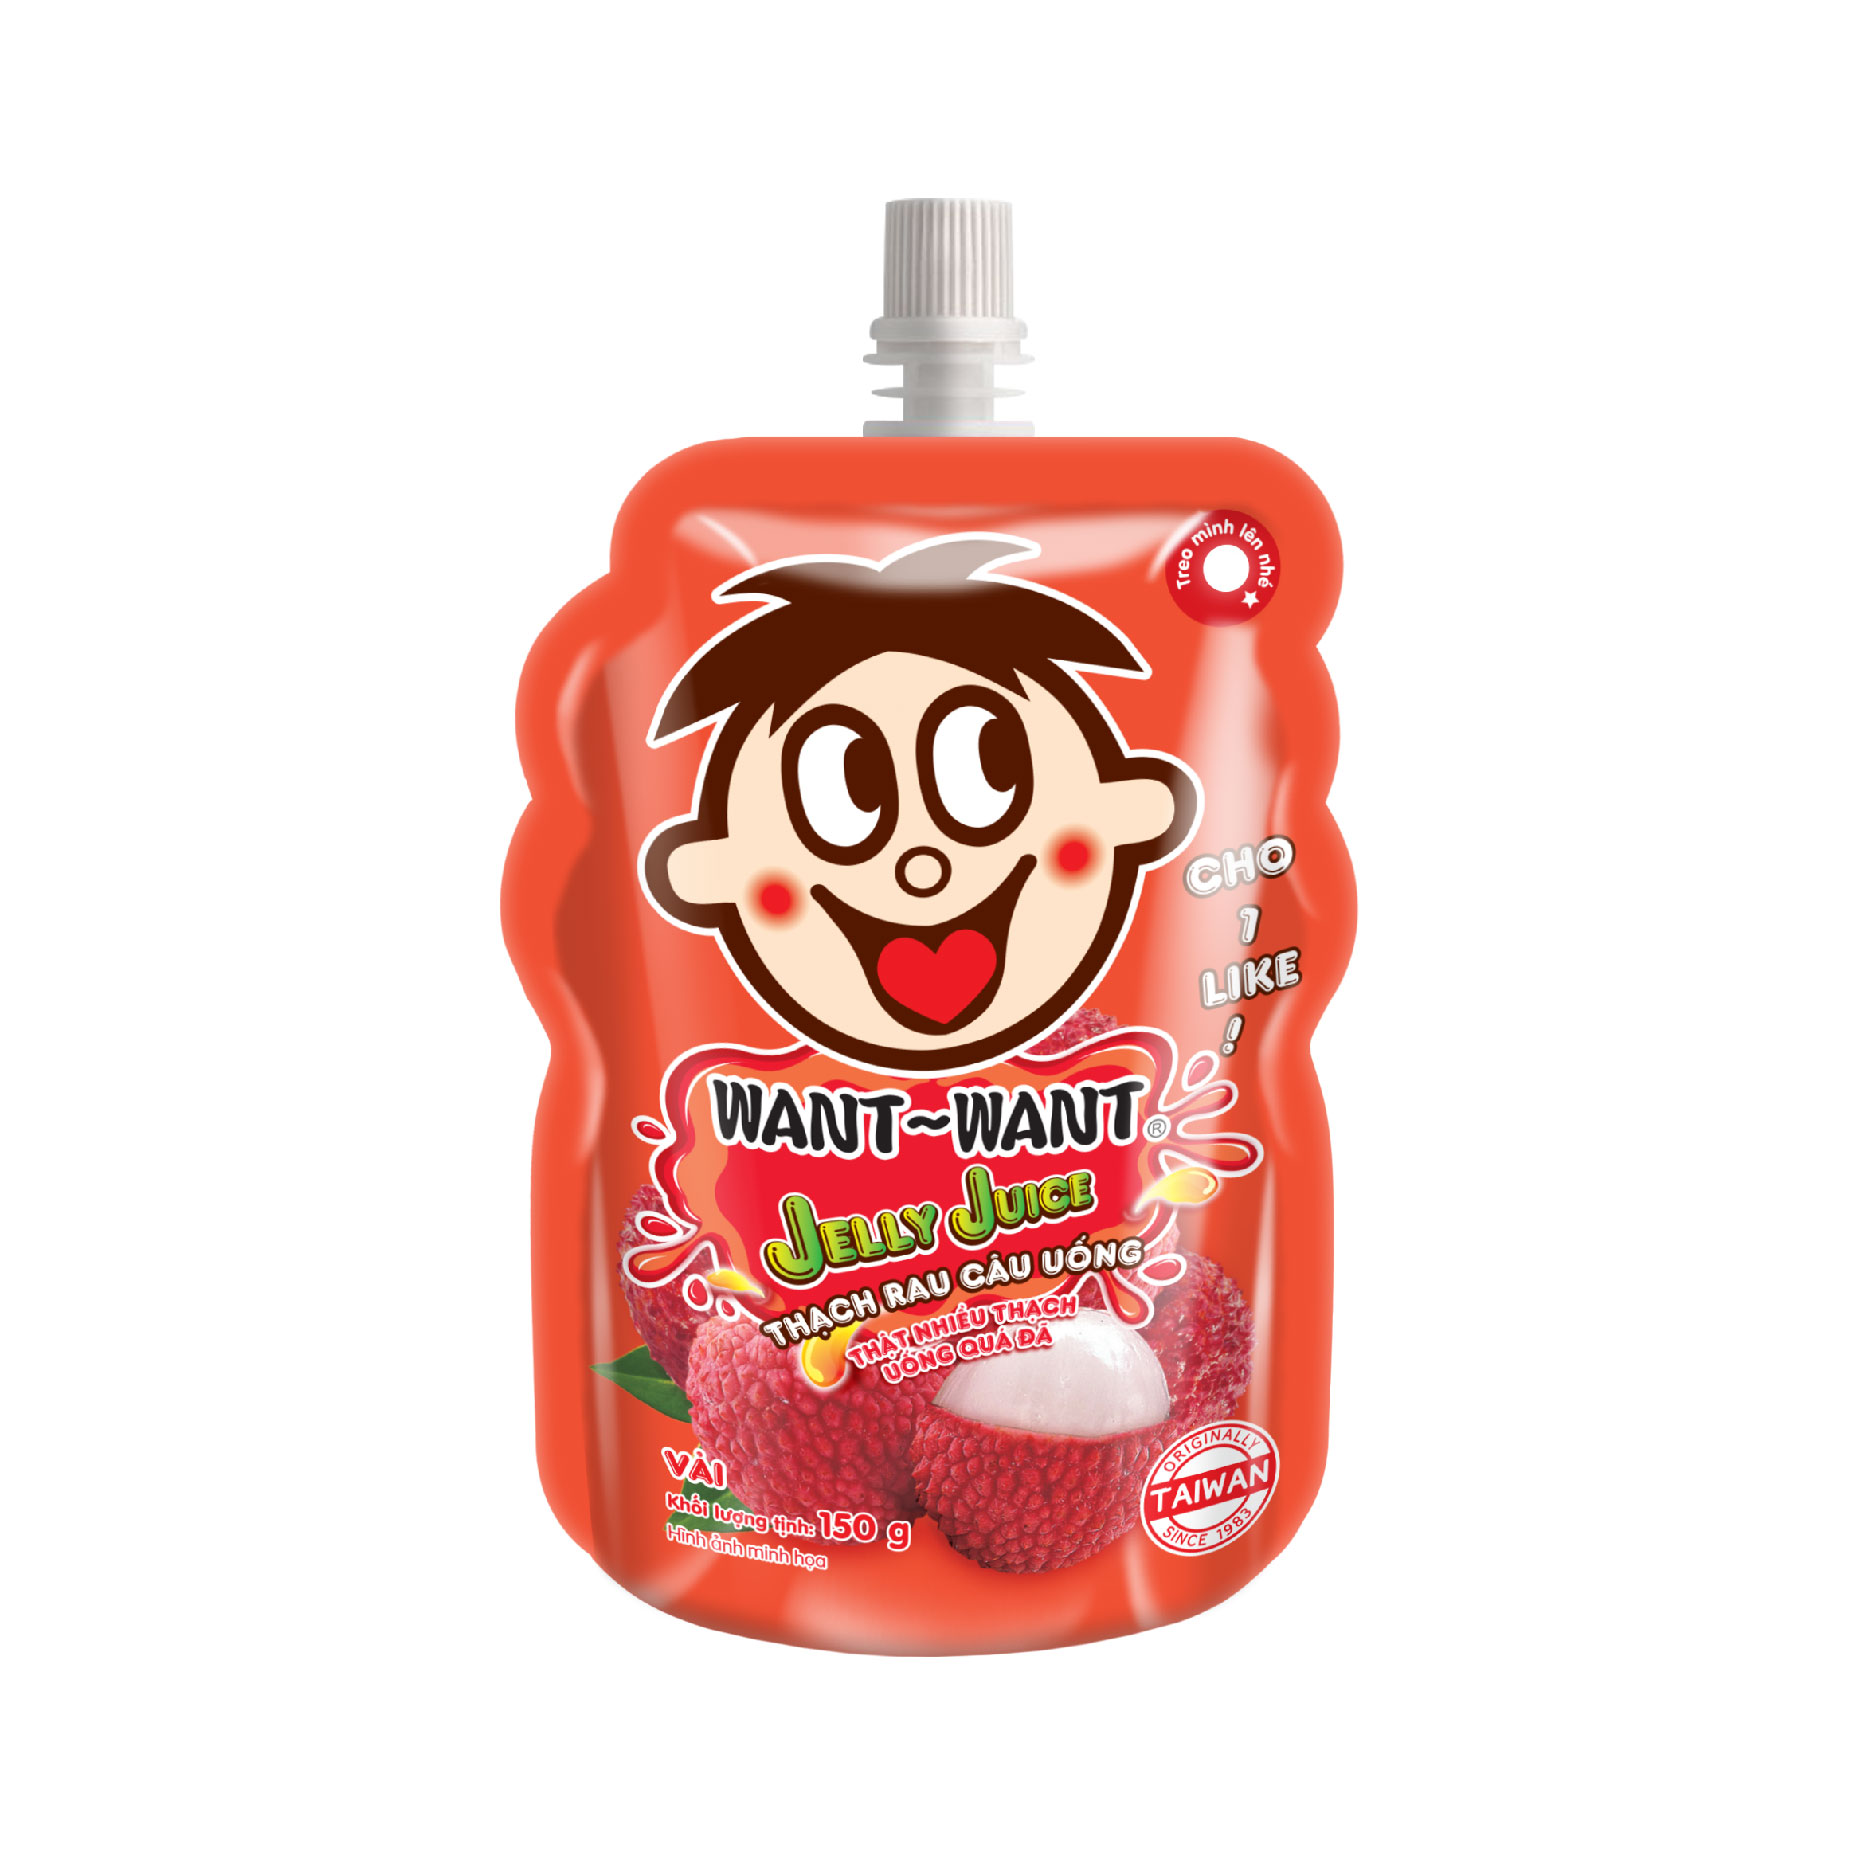 WANT WANT Jelly Juice Tropical Fruit Juice Flavor 150g